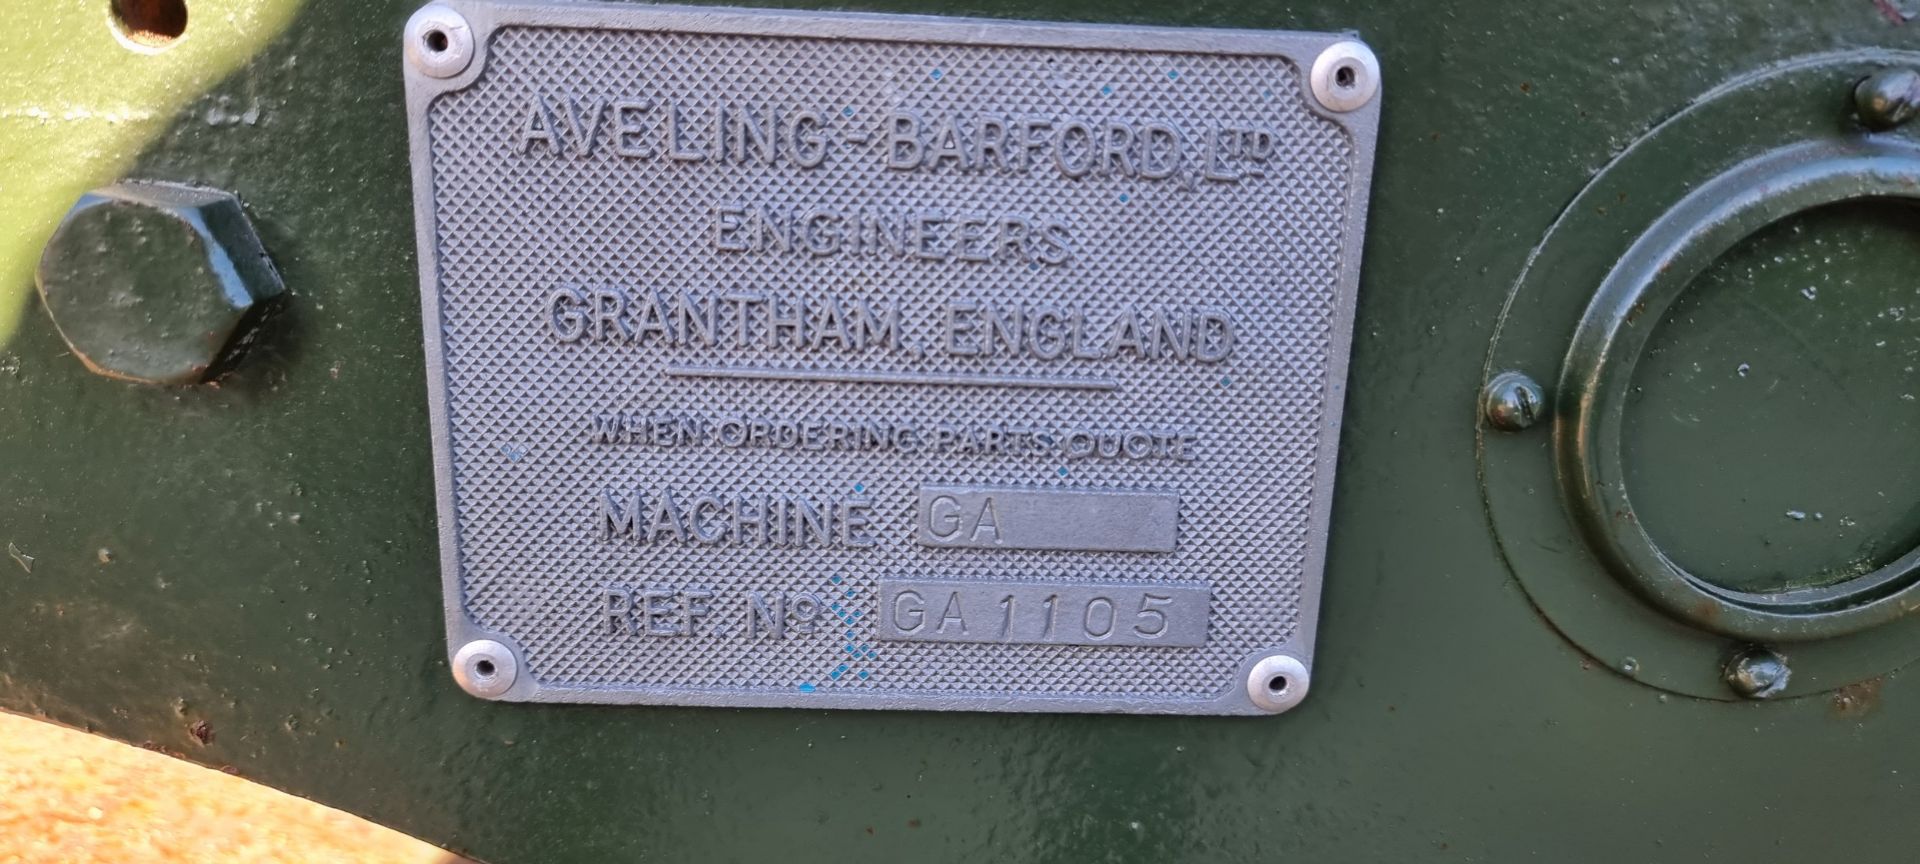 Aveling Barford GA Road Roller, c.1959. Serial number GA 1105. In 1933 Aveling-Barford, Ltd. were - Image 8 of 10